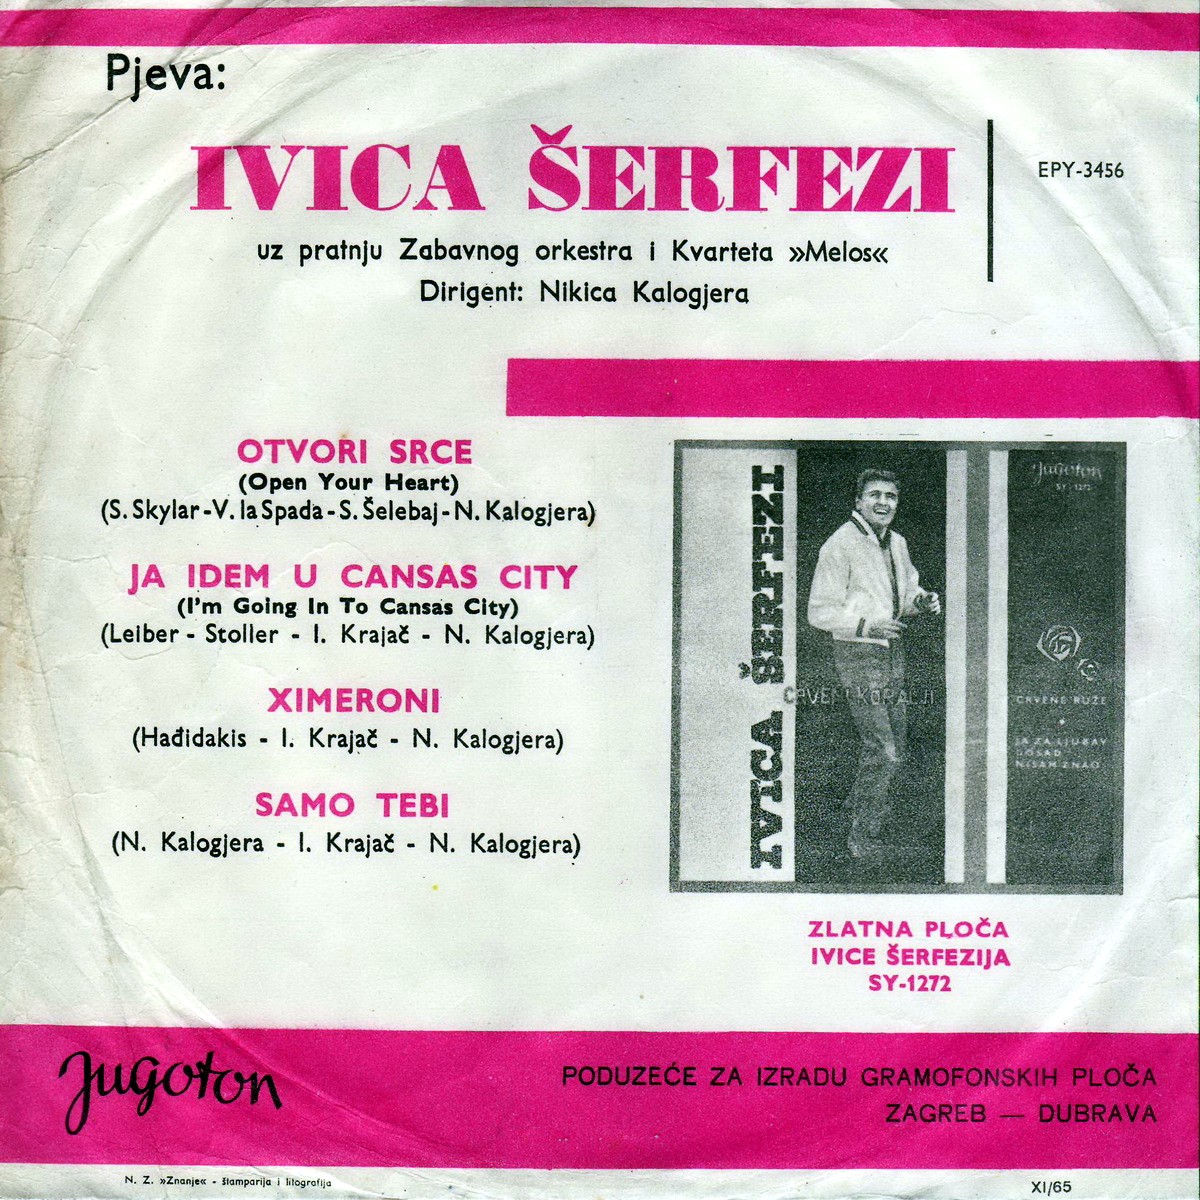 Ivica Serfezi 1964 Otvori srce b